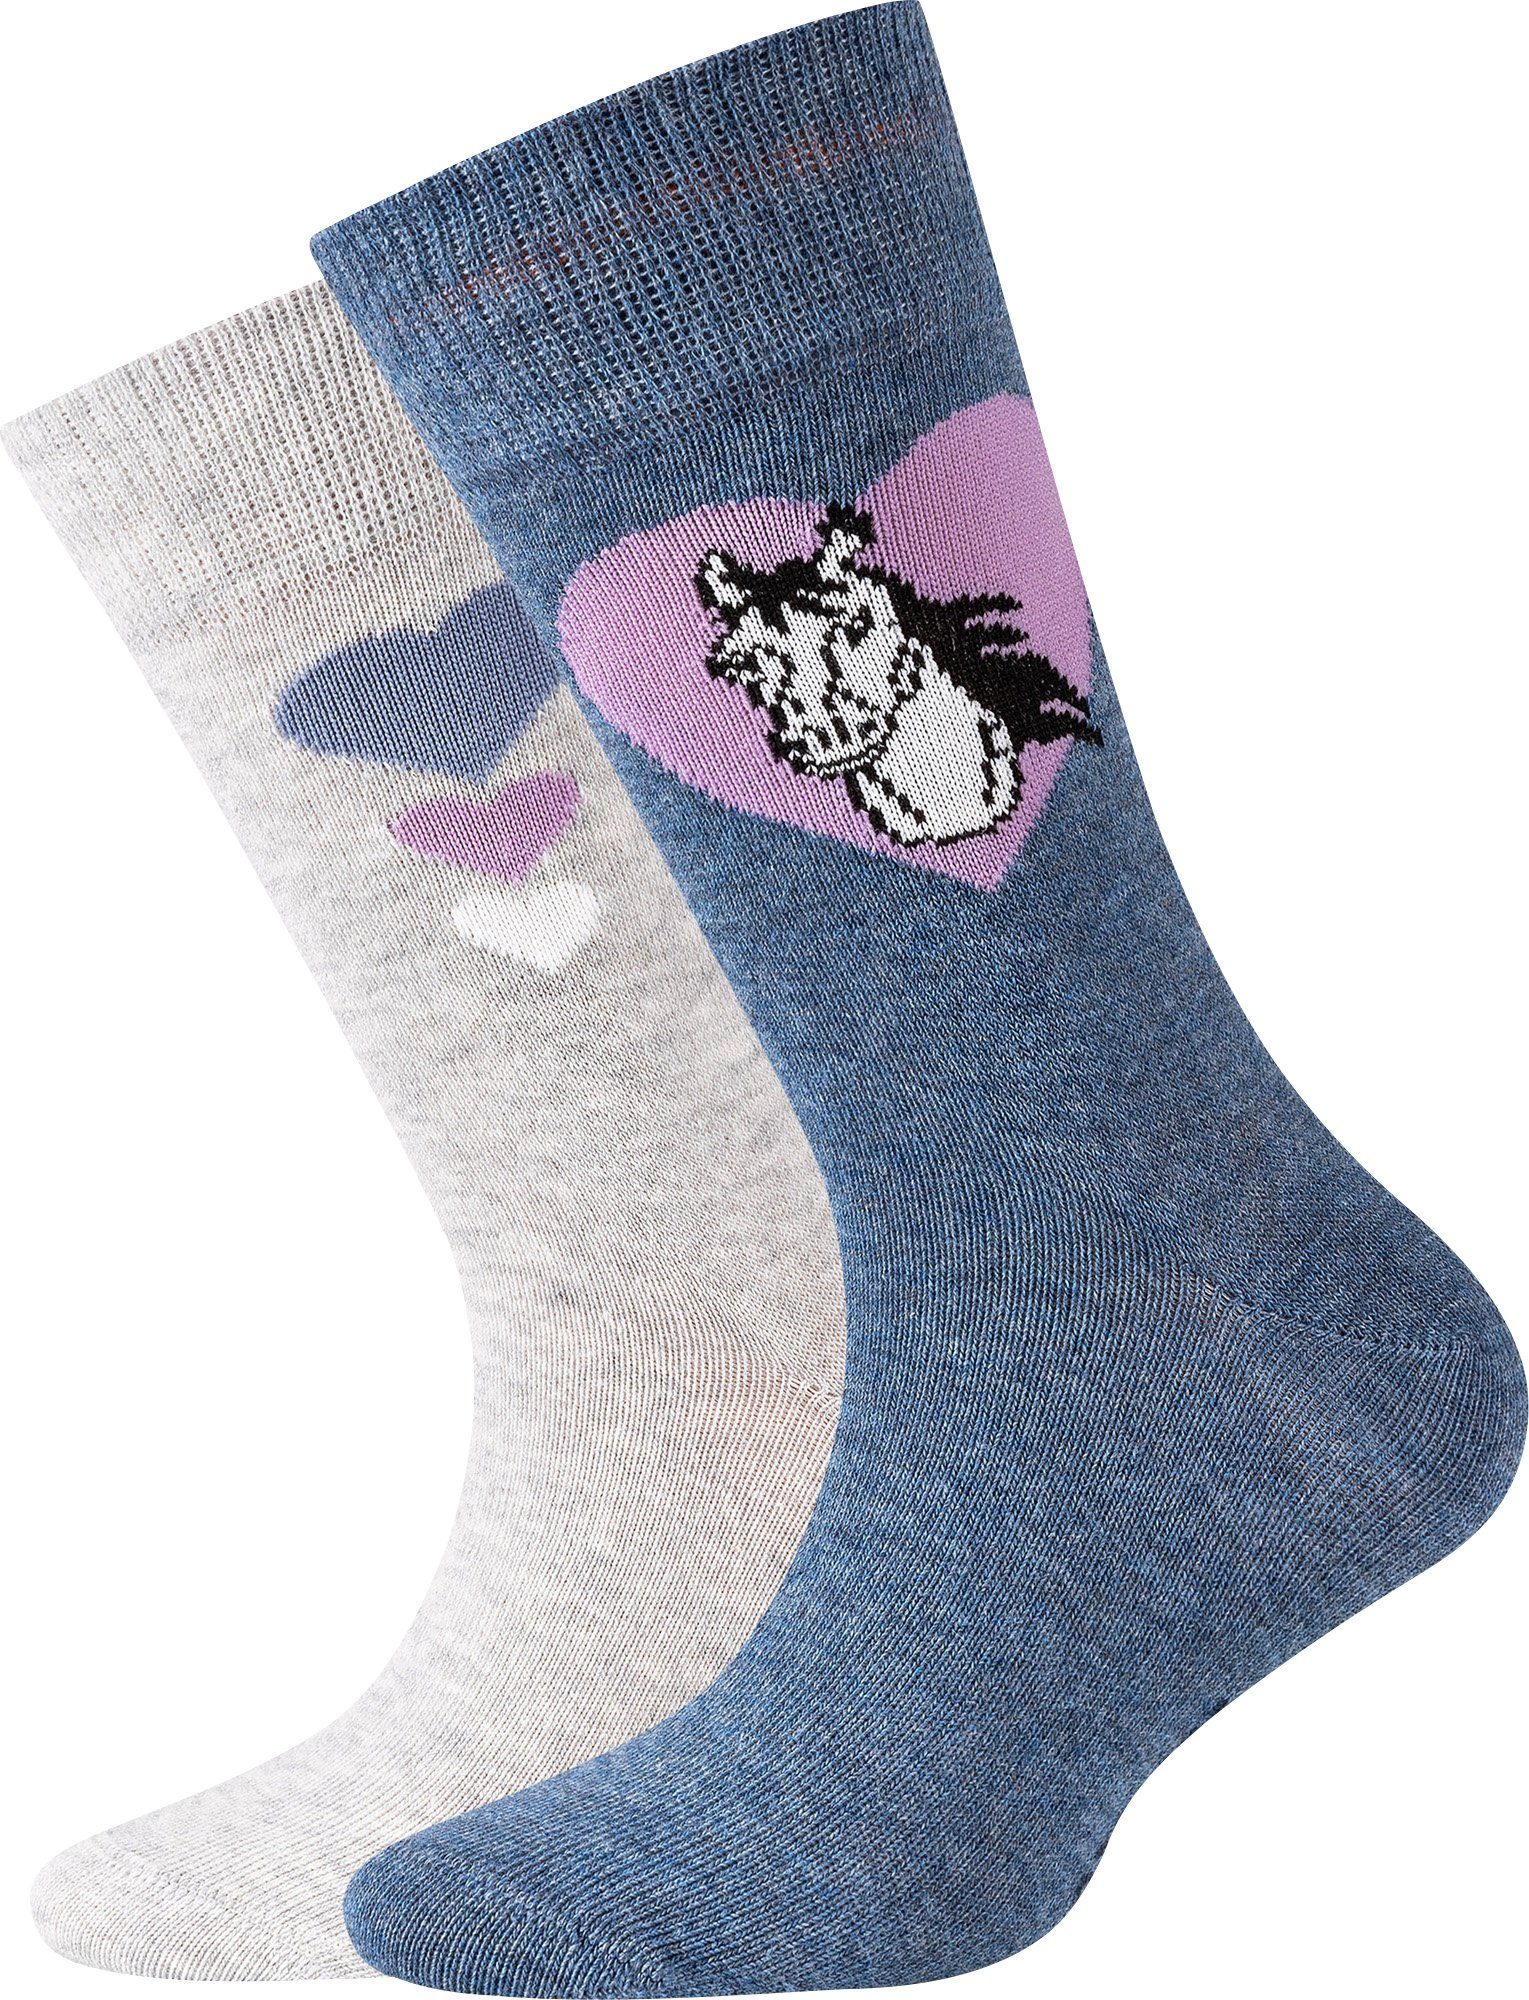 Camano Socken Kinder-Socken 2 Paar Motiv: Pferd, Herzen | Lange Socken